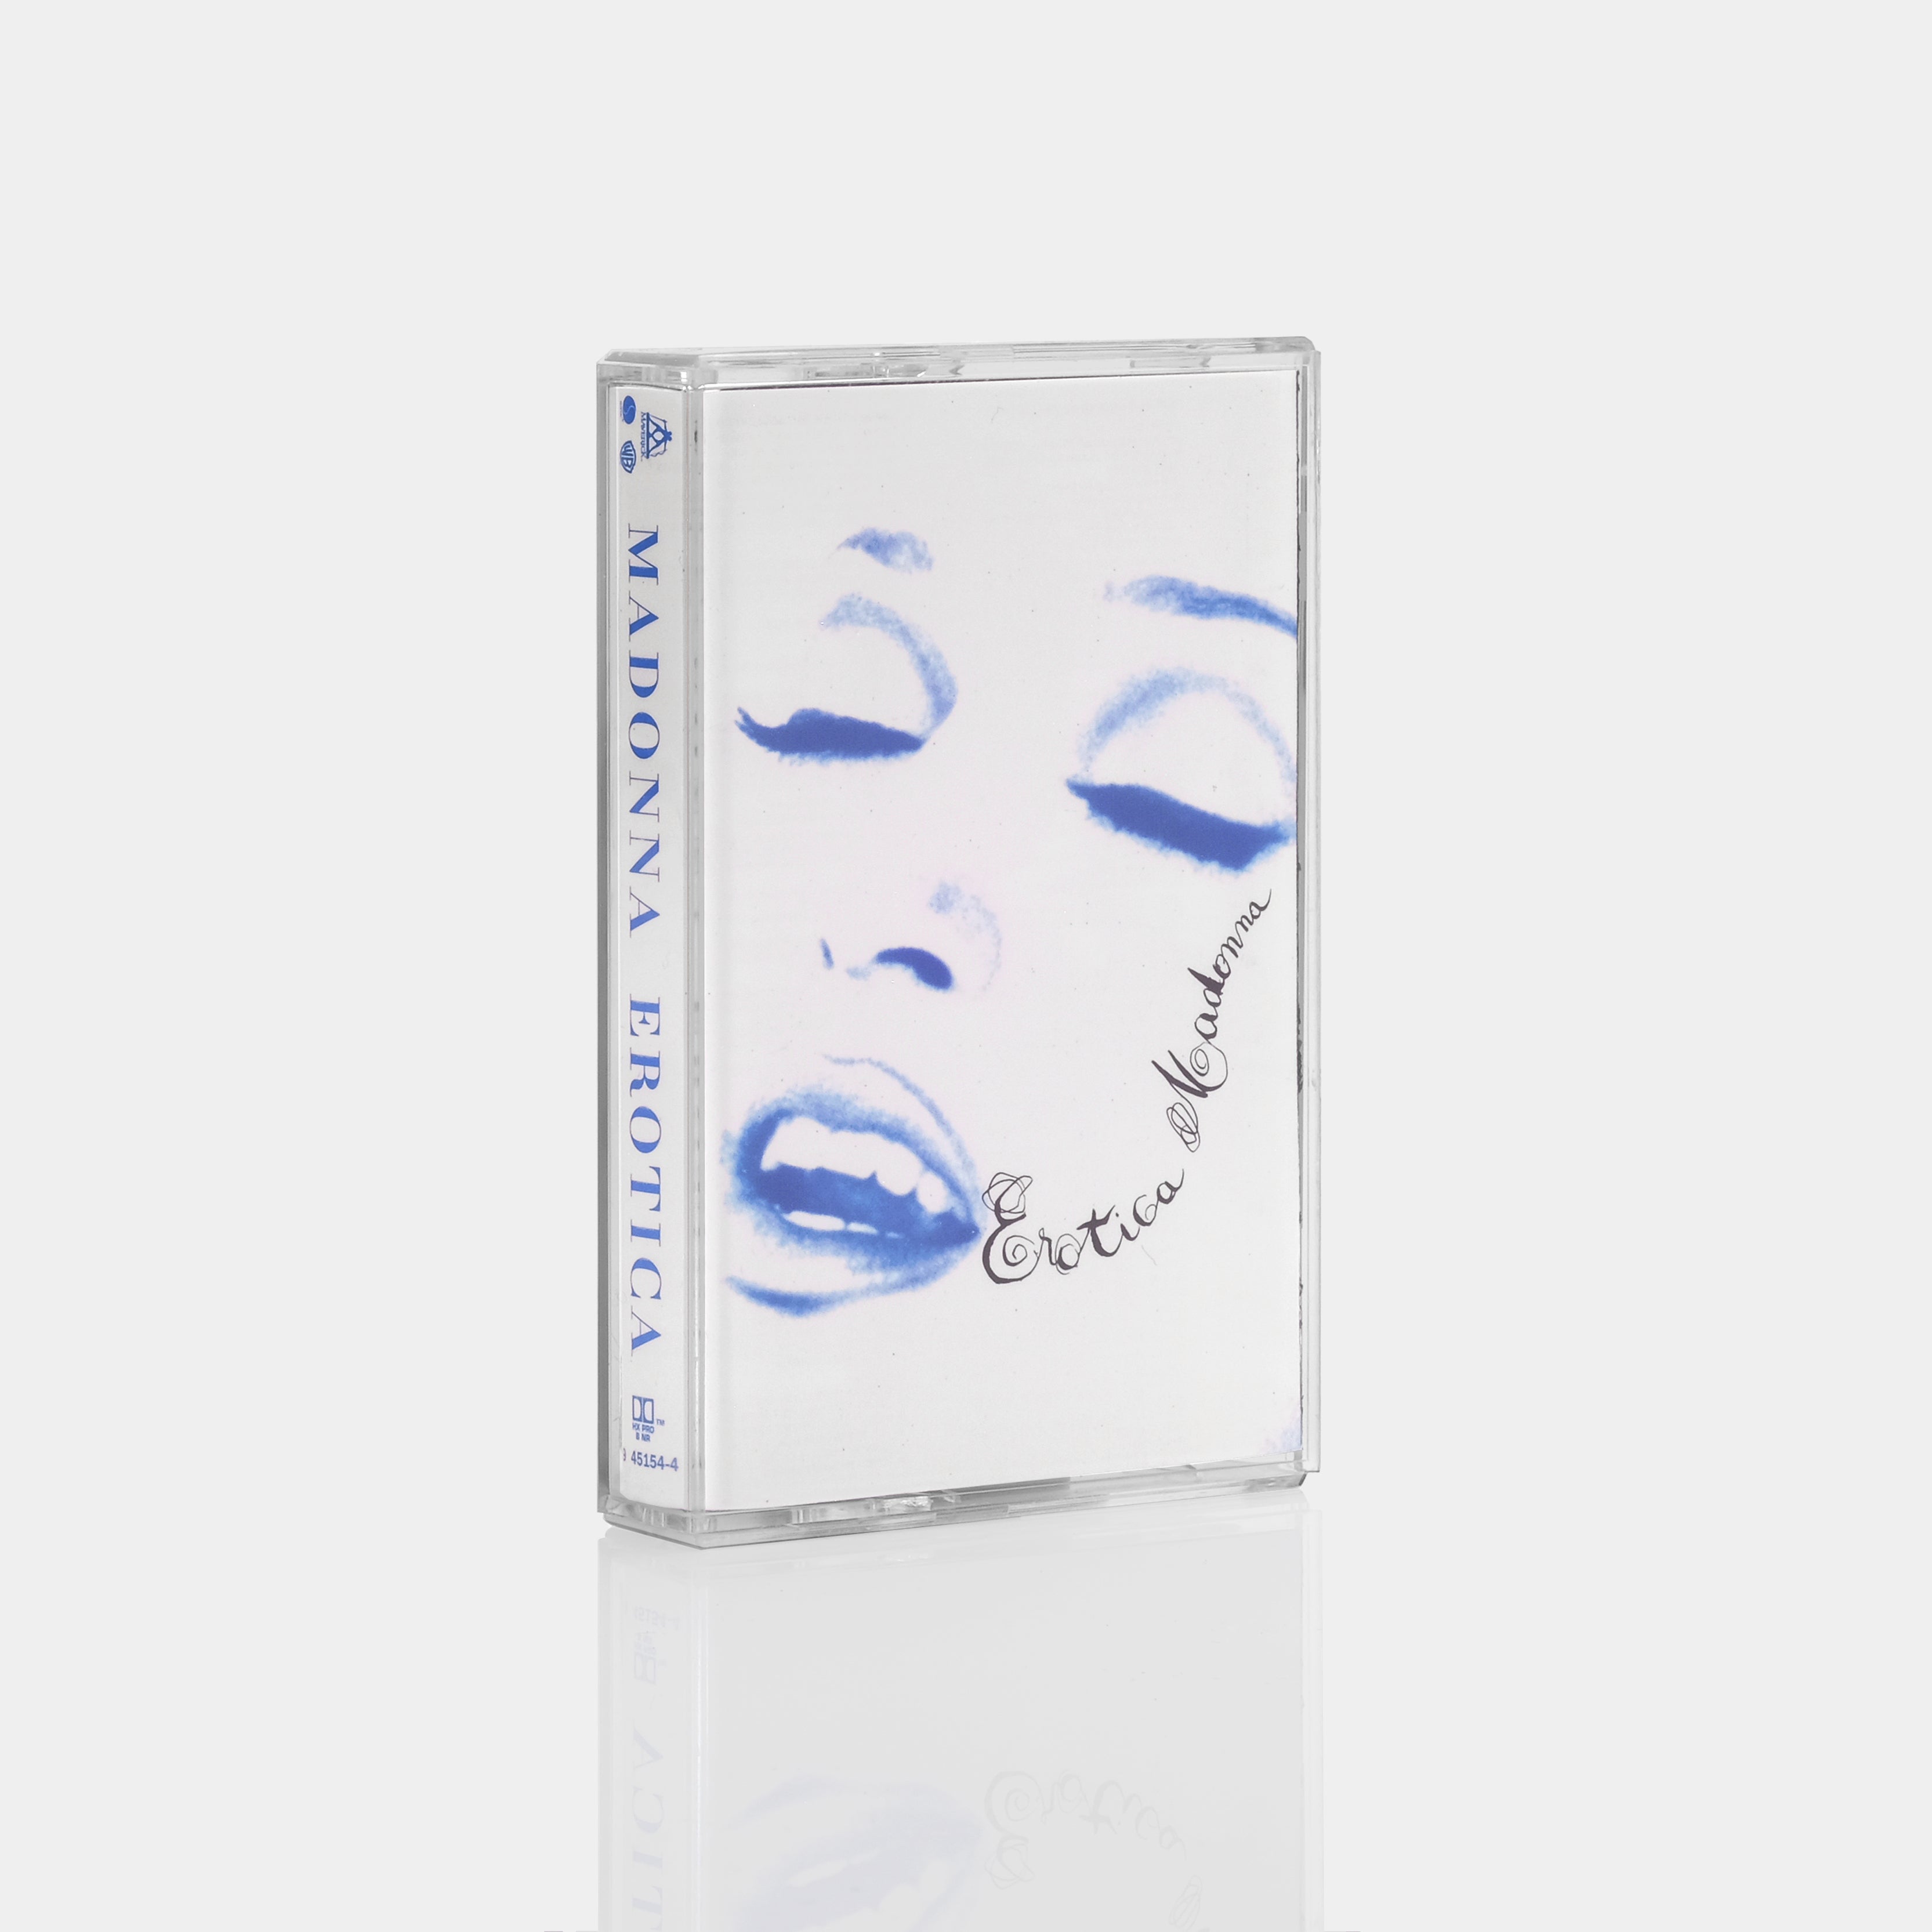 Madonna - Erotica Cassette Tape